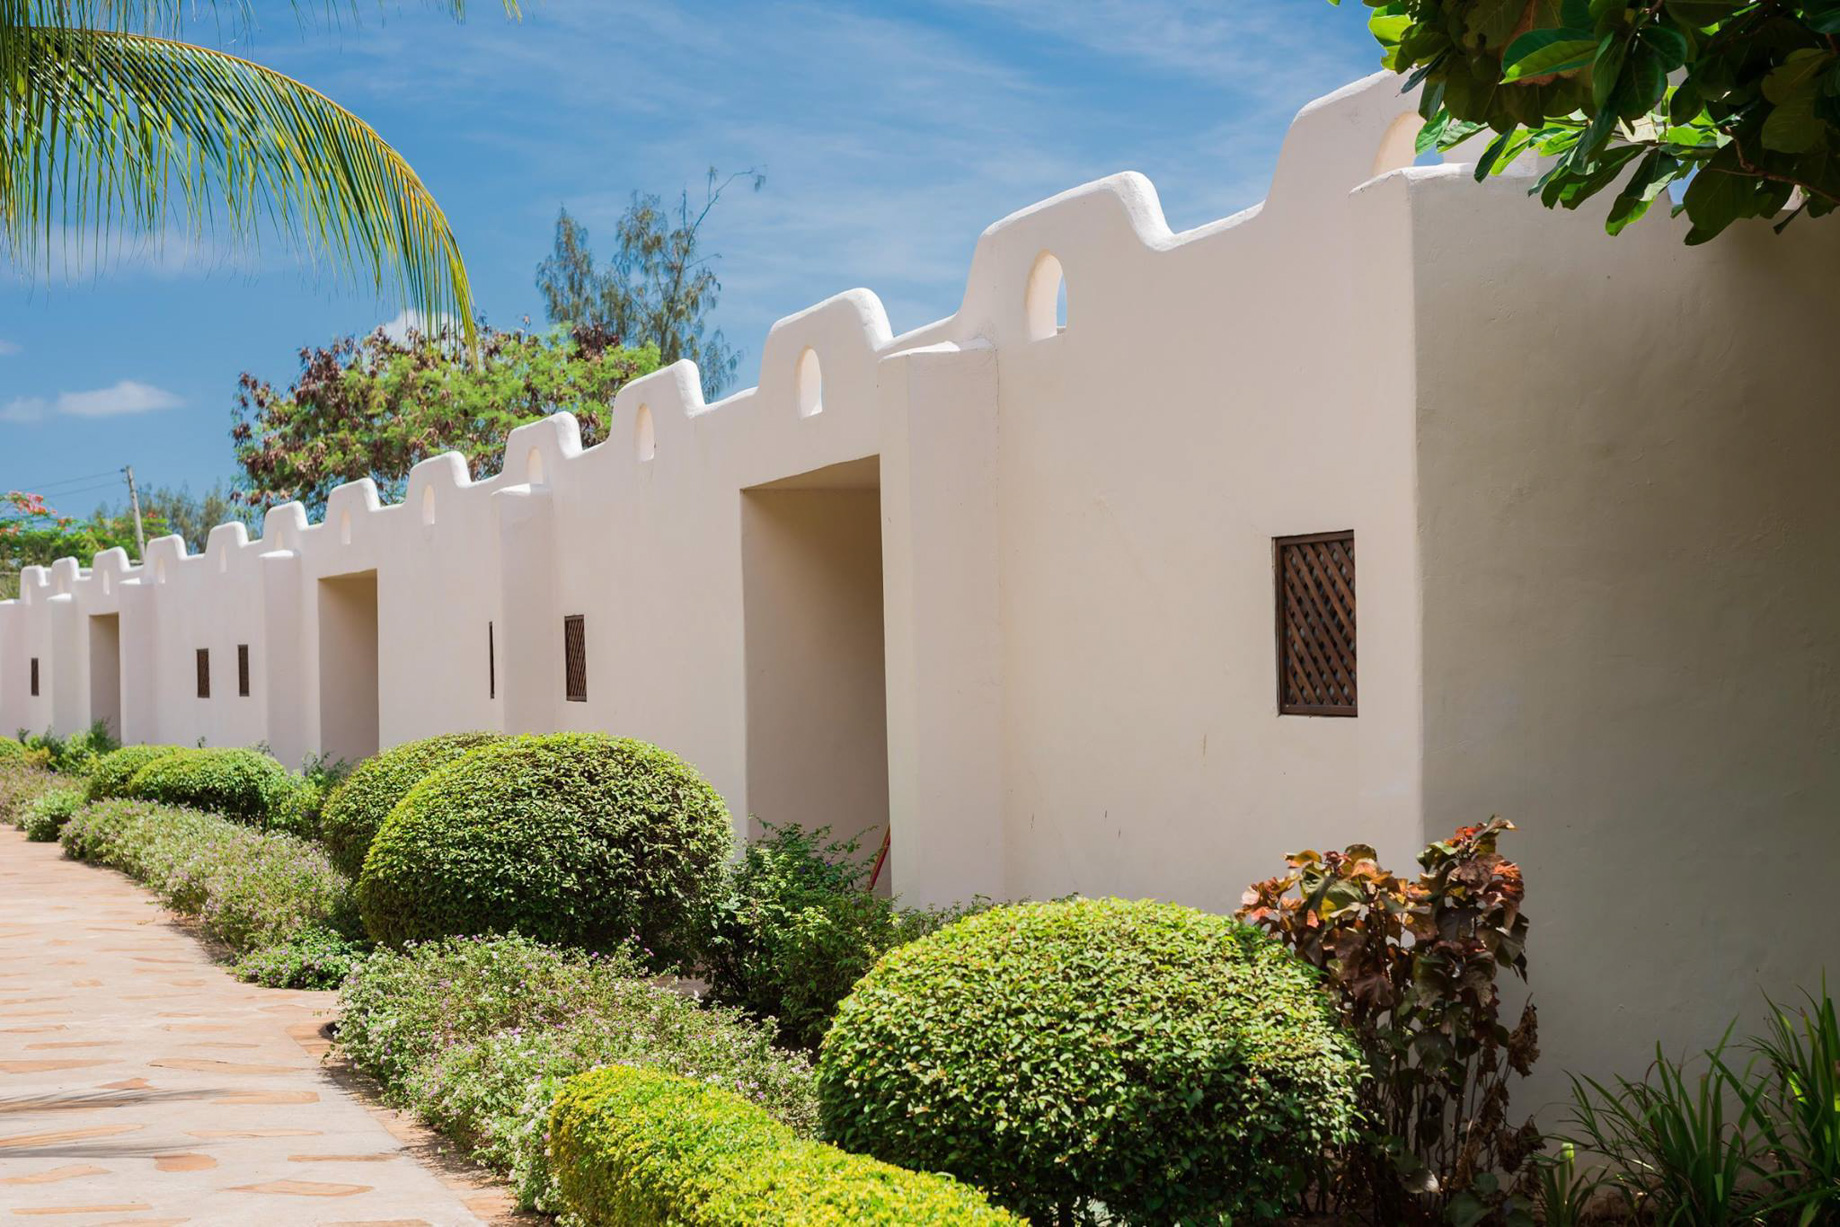 Gold Zanzibar Beach House & Spa Resort – Nungwi, Zanzibar, Tanzania – Accommodations